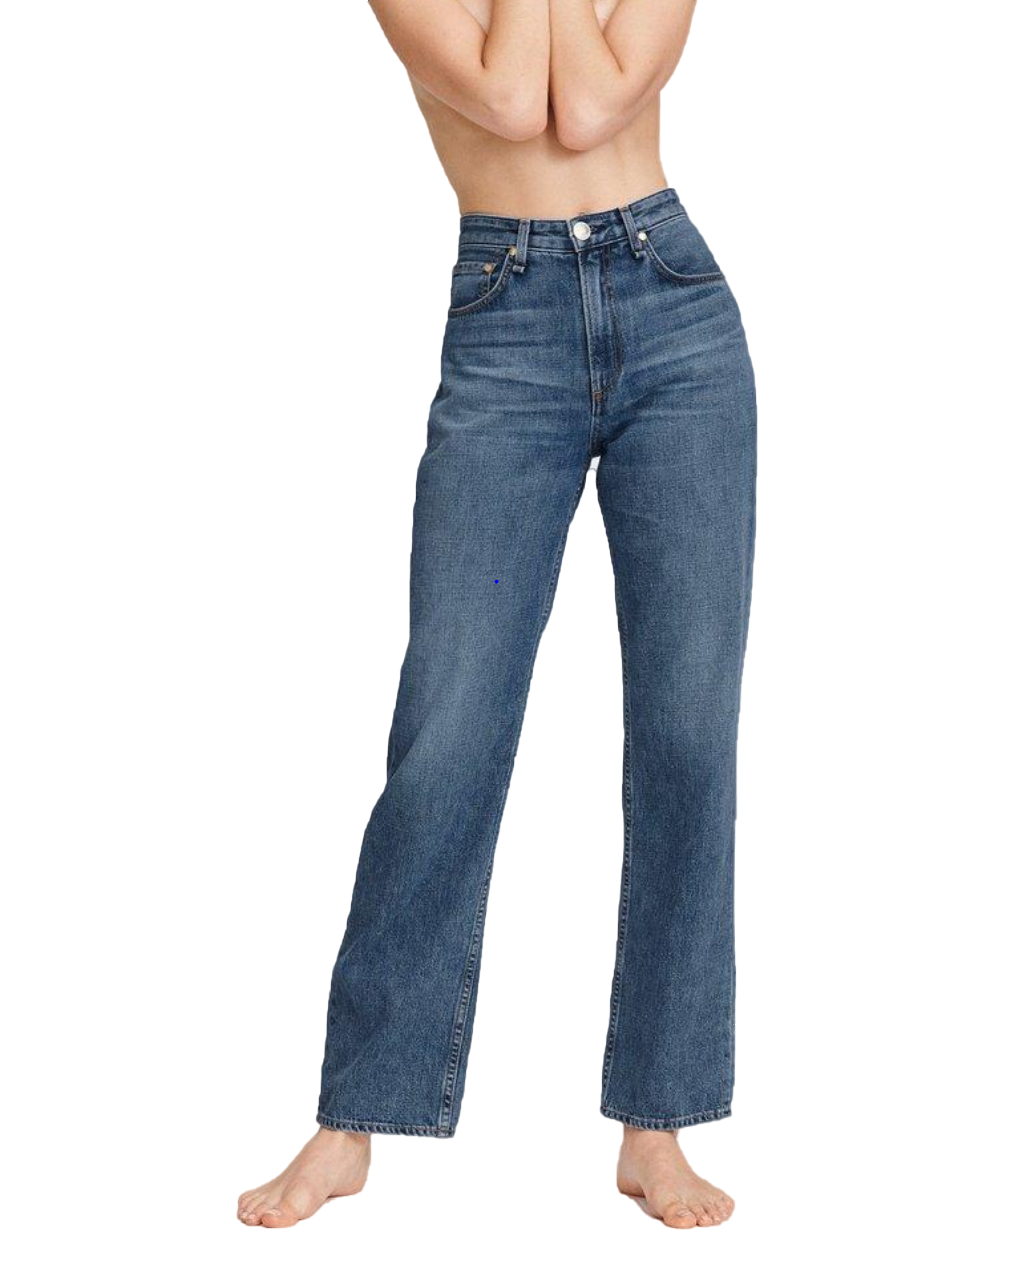 Rag & Bone Super High-Rise Straight Jeans - Size 30 – Dezigner Heaven®, LLC.